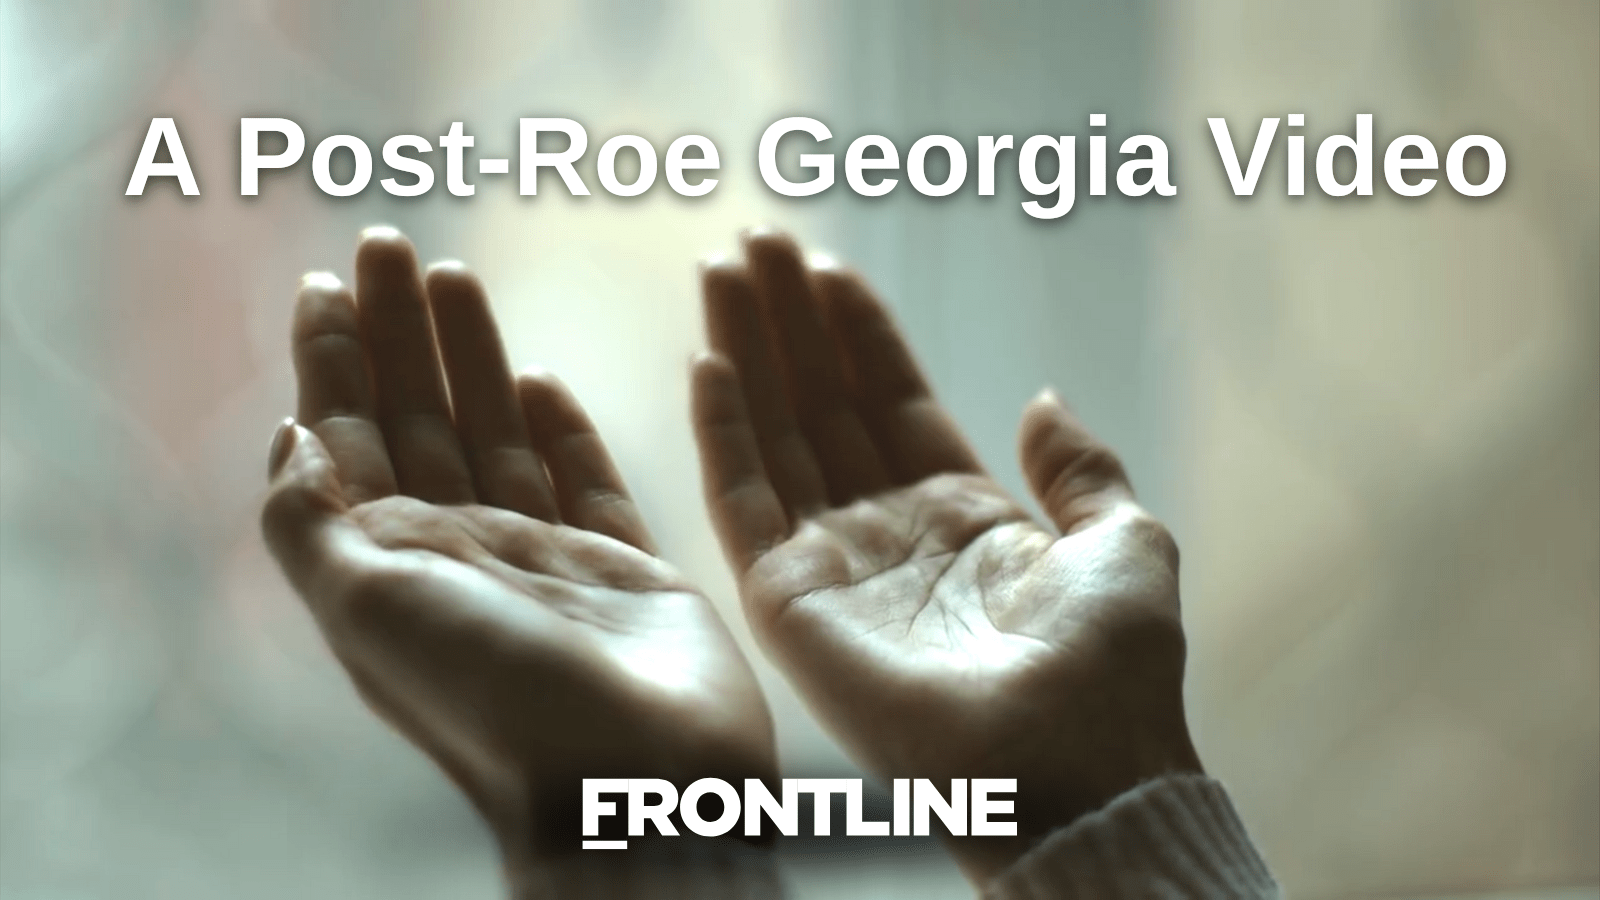 Frontline Presents: A Post-Roe Georgia Video